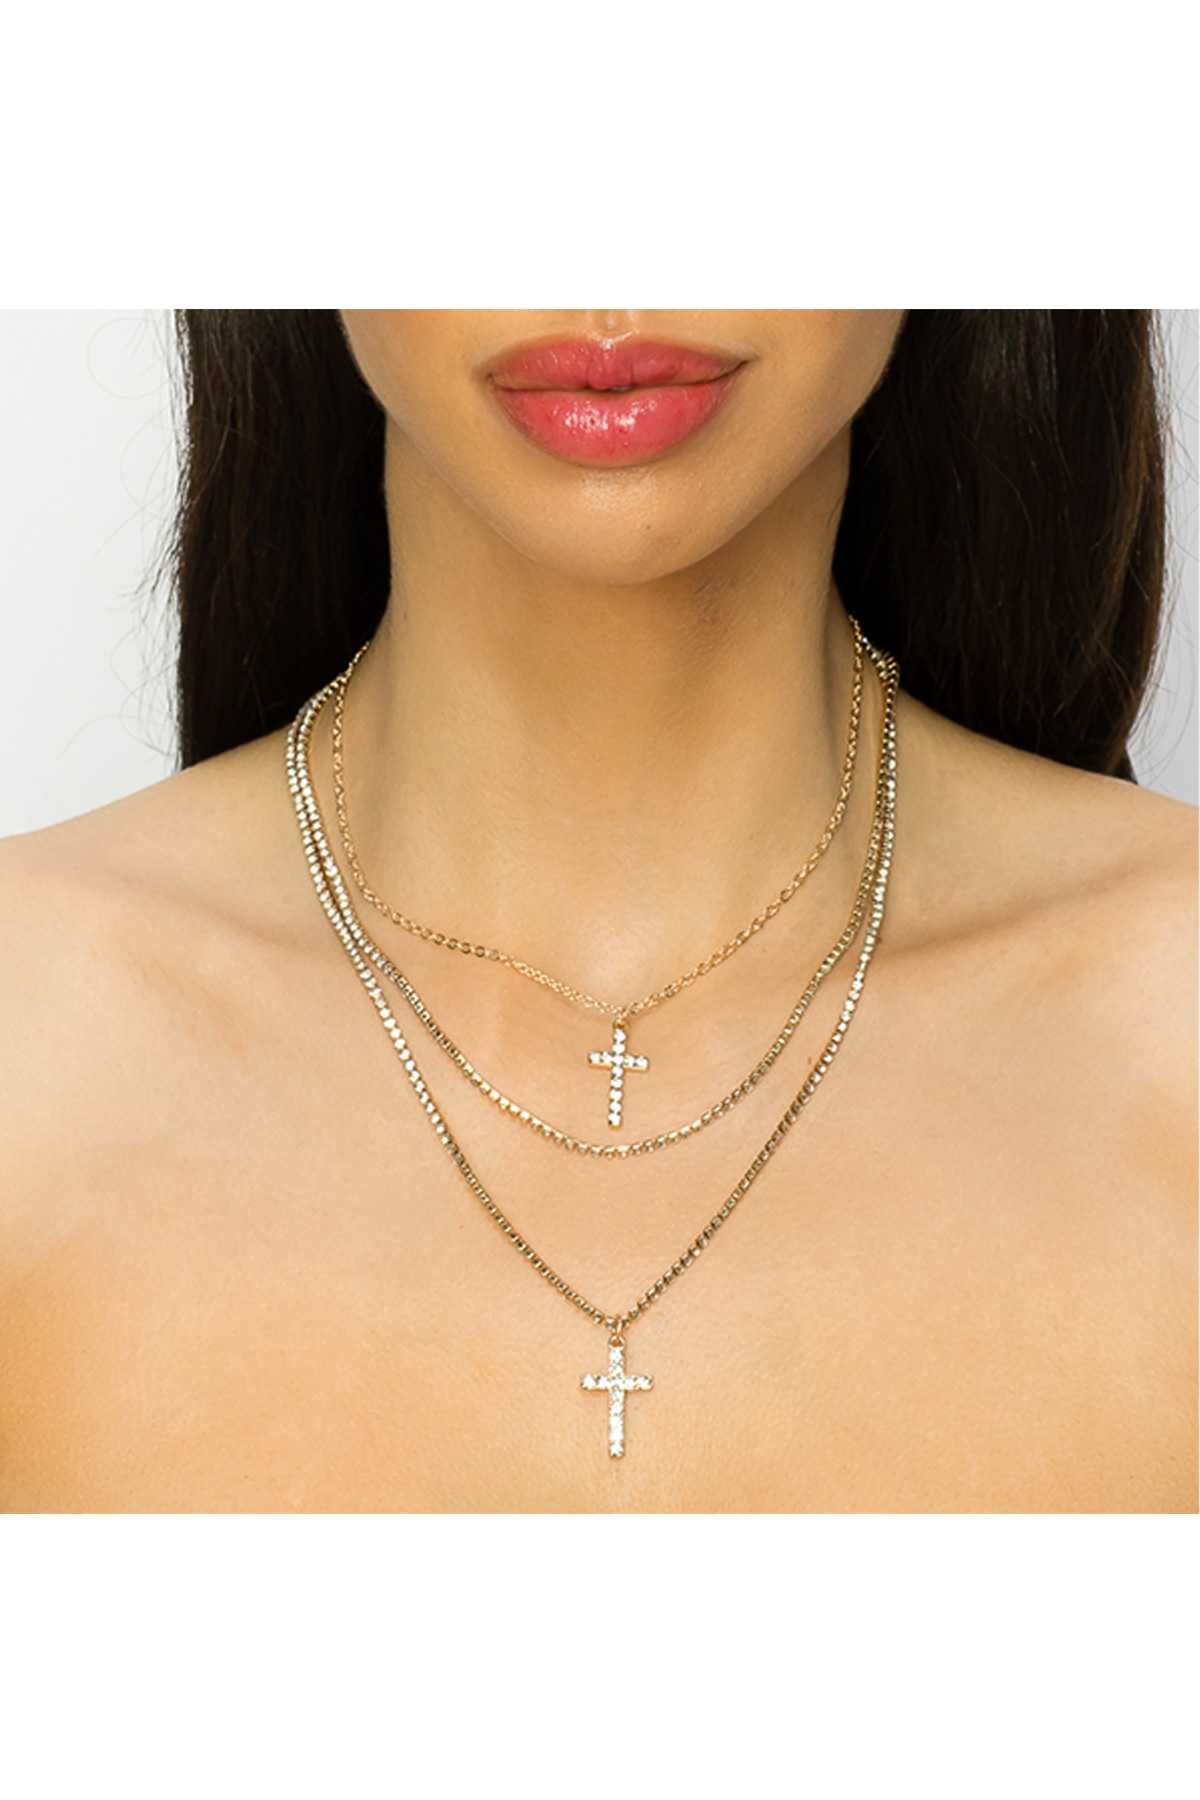 Rhinestone Cross and Layered Chain Necklace